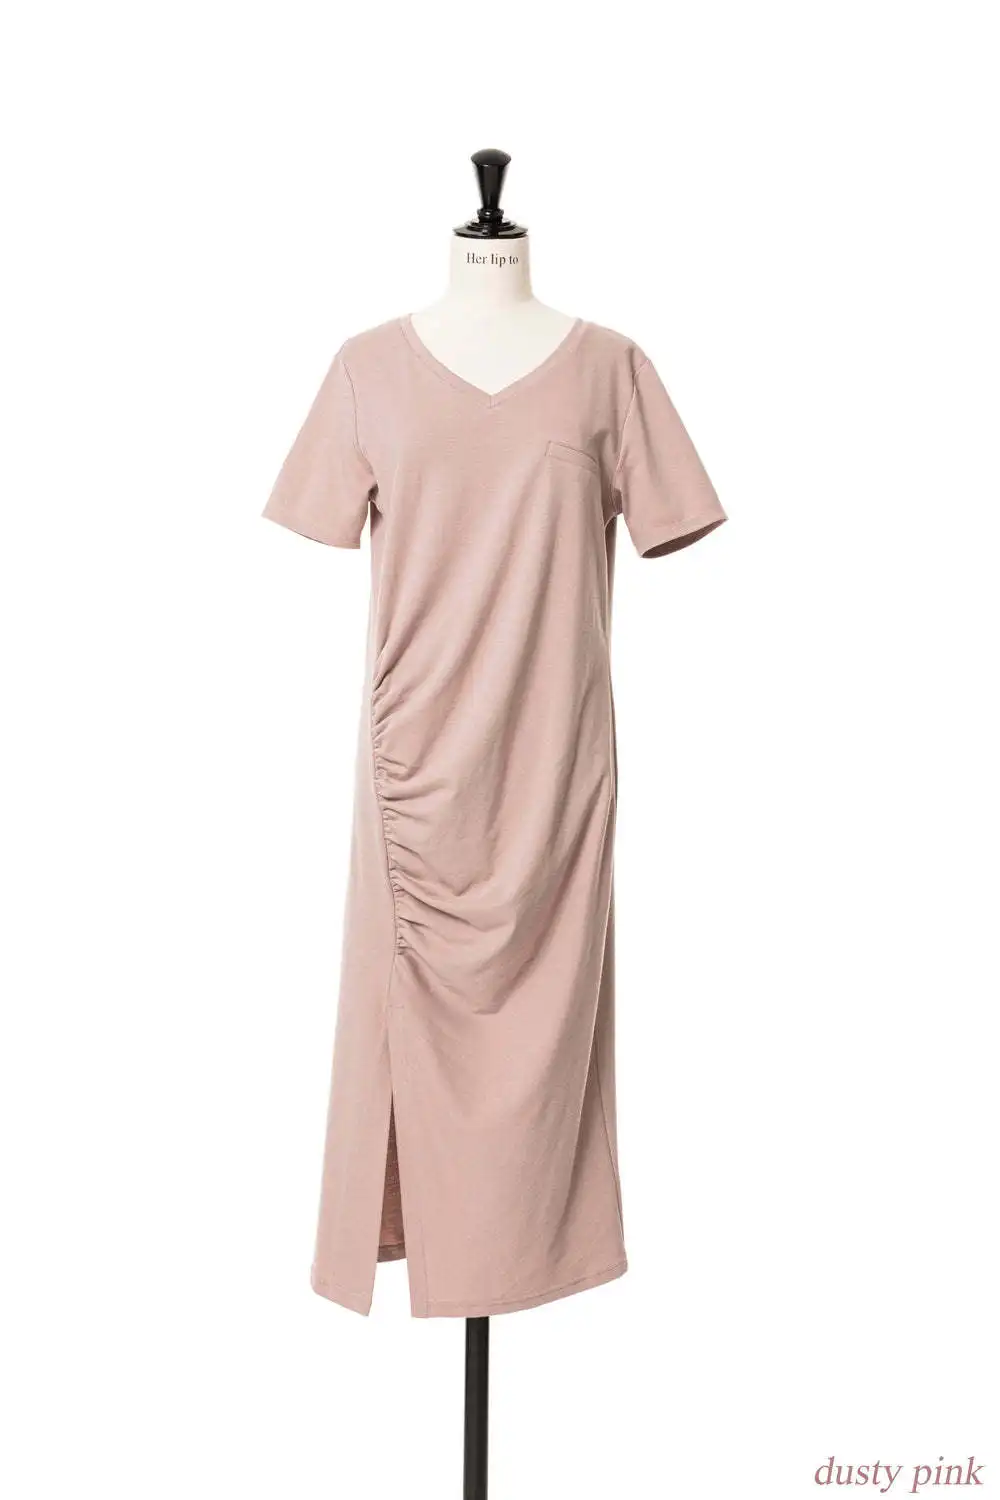 税込) Modern Classic Sleeveless Dress herlipto